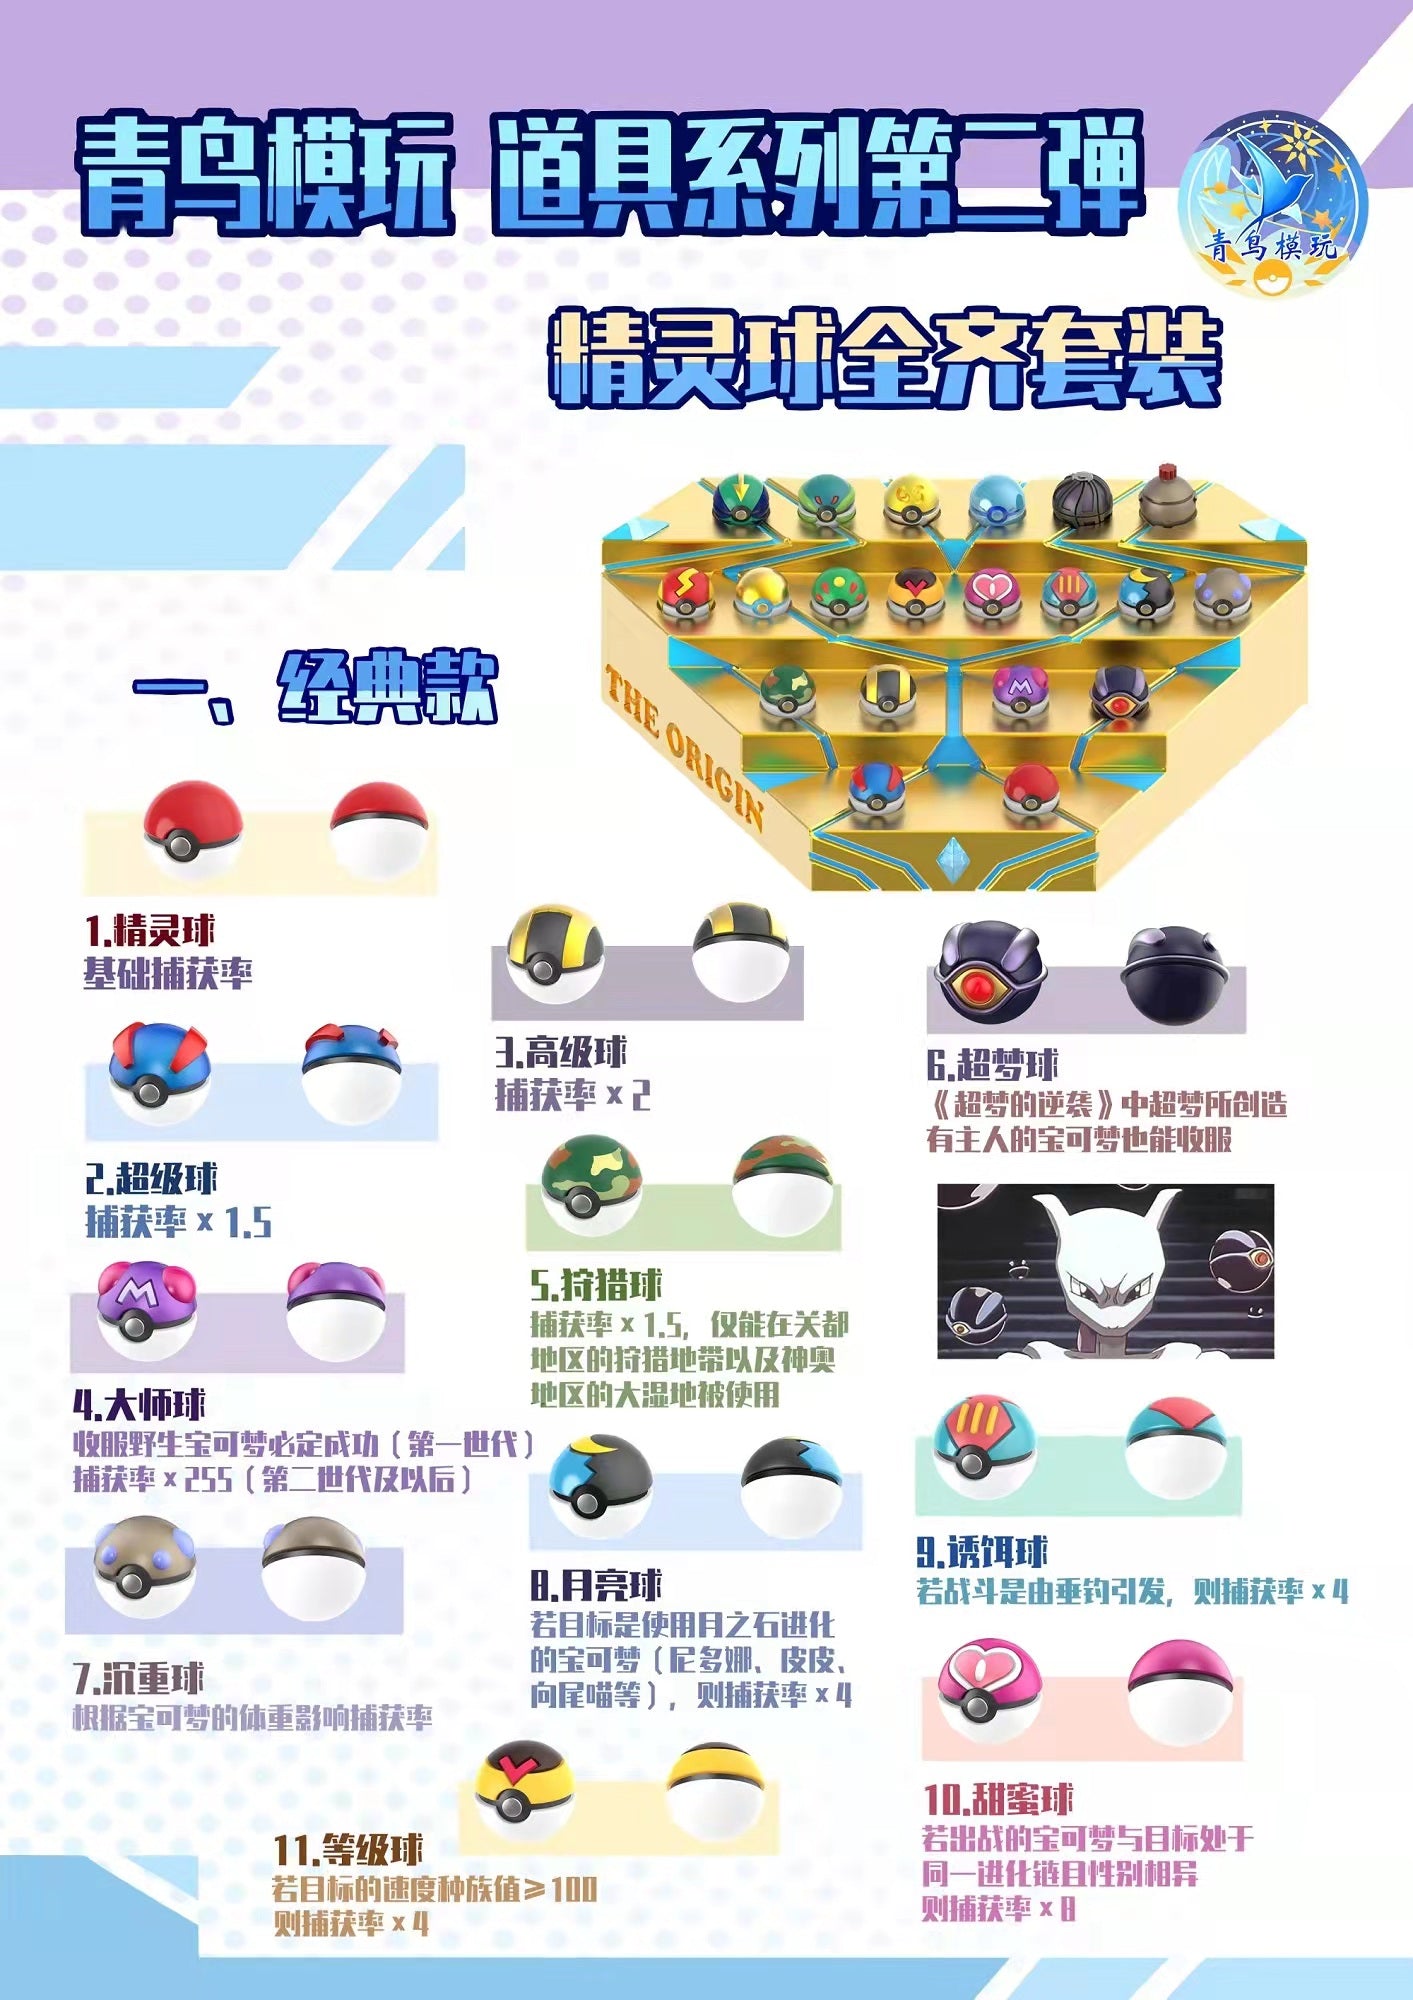 〖In Stock〗Pokemon Scale World Poké Ball Set 1:20 - Lucky wings Studio